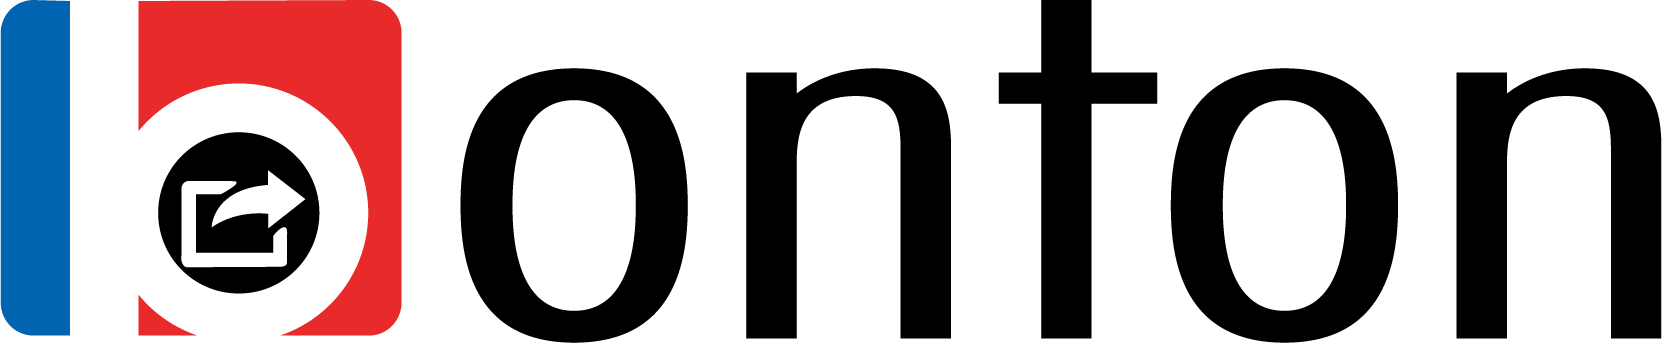 Bonton - Sales and Distribution Management System